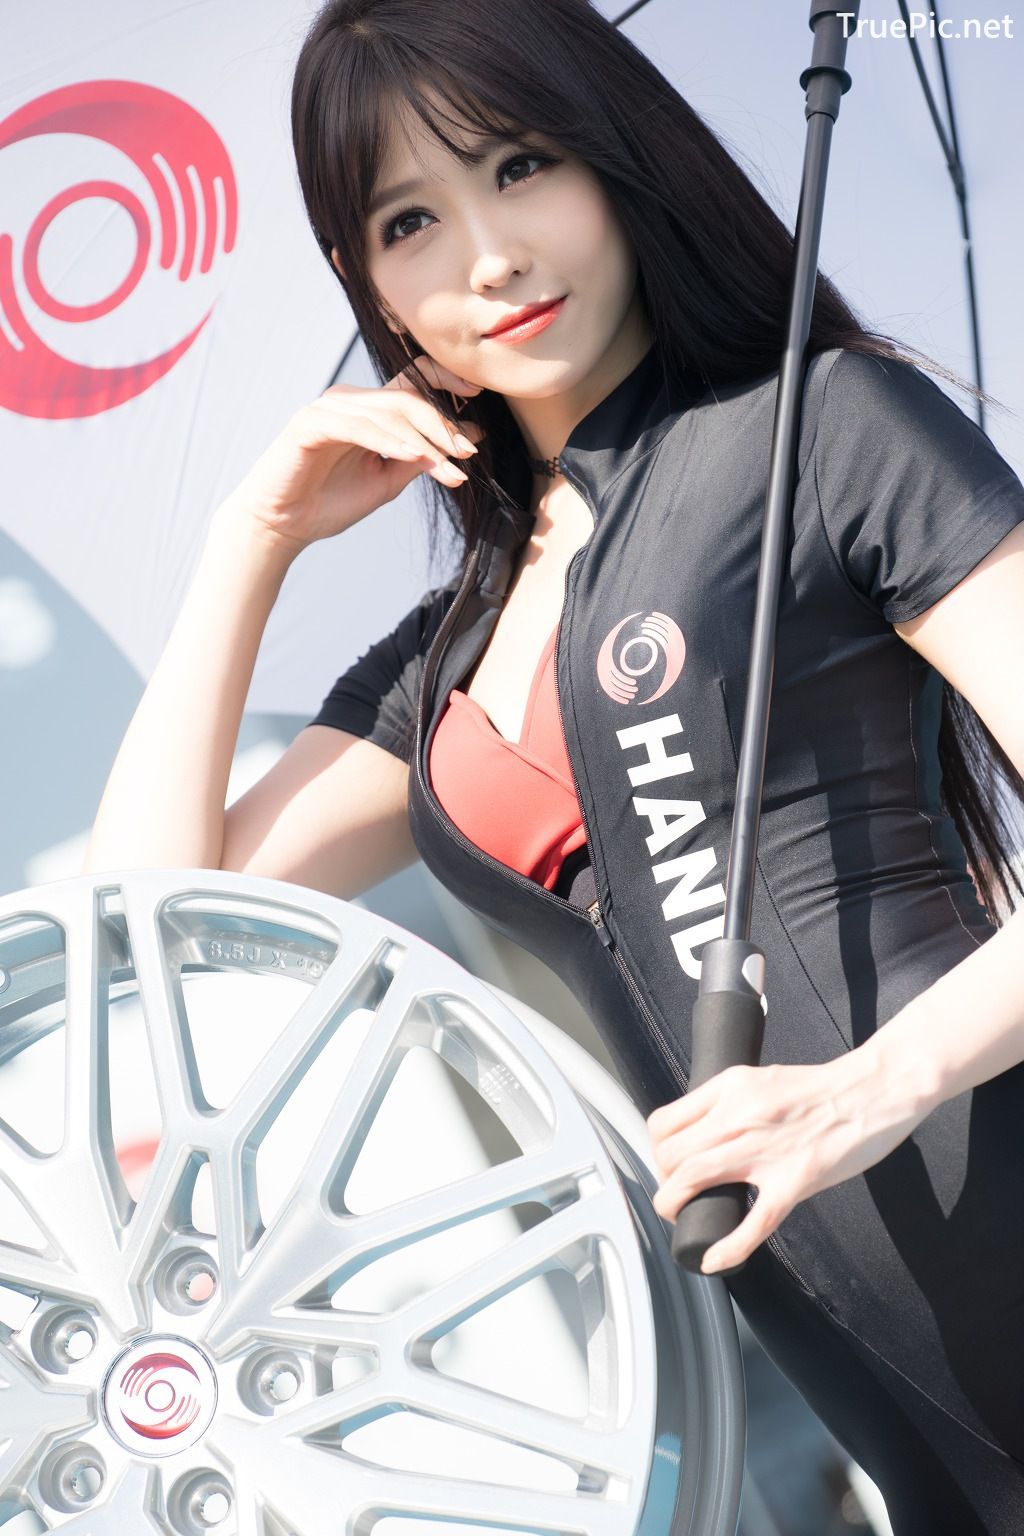 Image-Korean-Racing-Model-Lee-Eun-Hye-At-Incheon-Korea-Tuning-Festival-TruePic.net- Picture-211